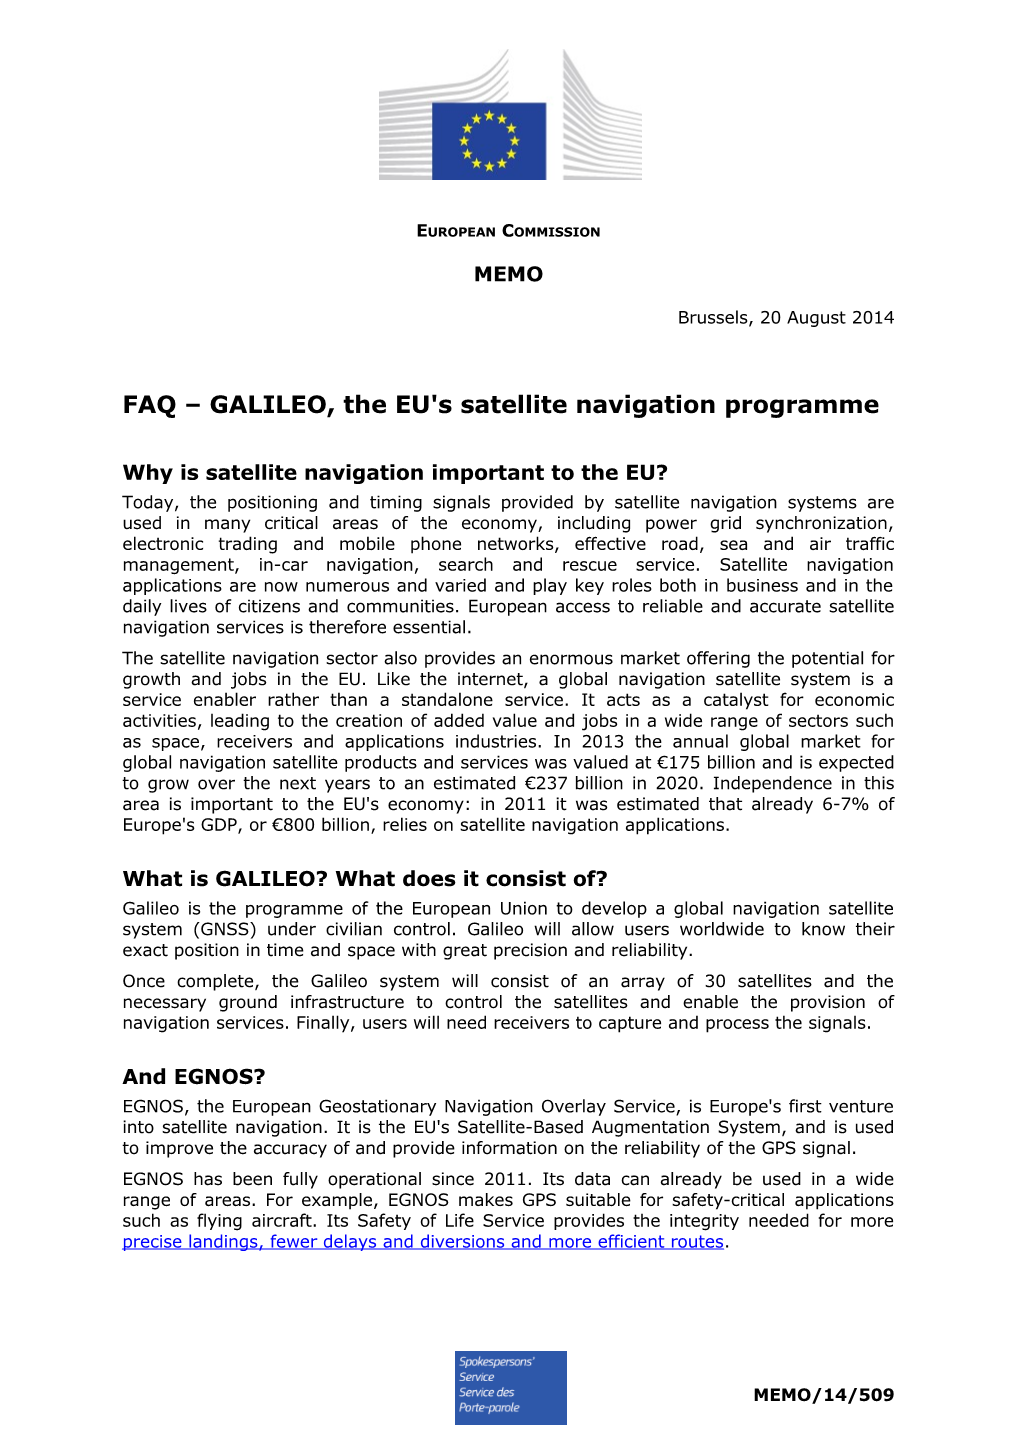 FAQ GALILEO, the EU's Satellite Navigation Programme